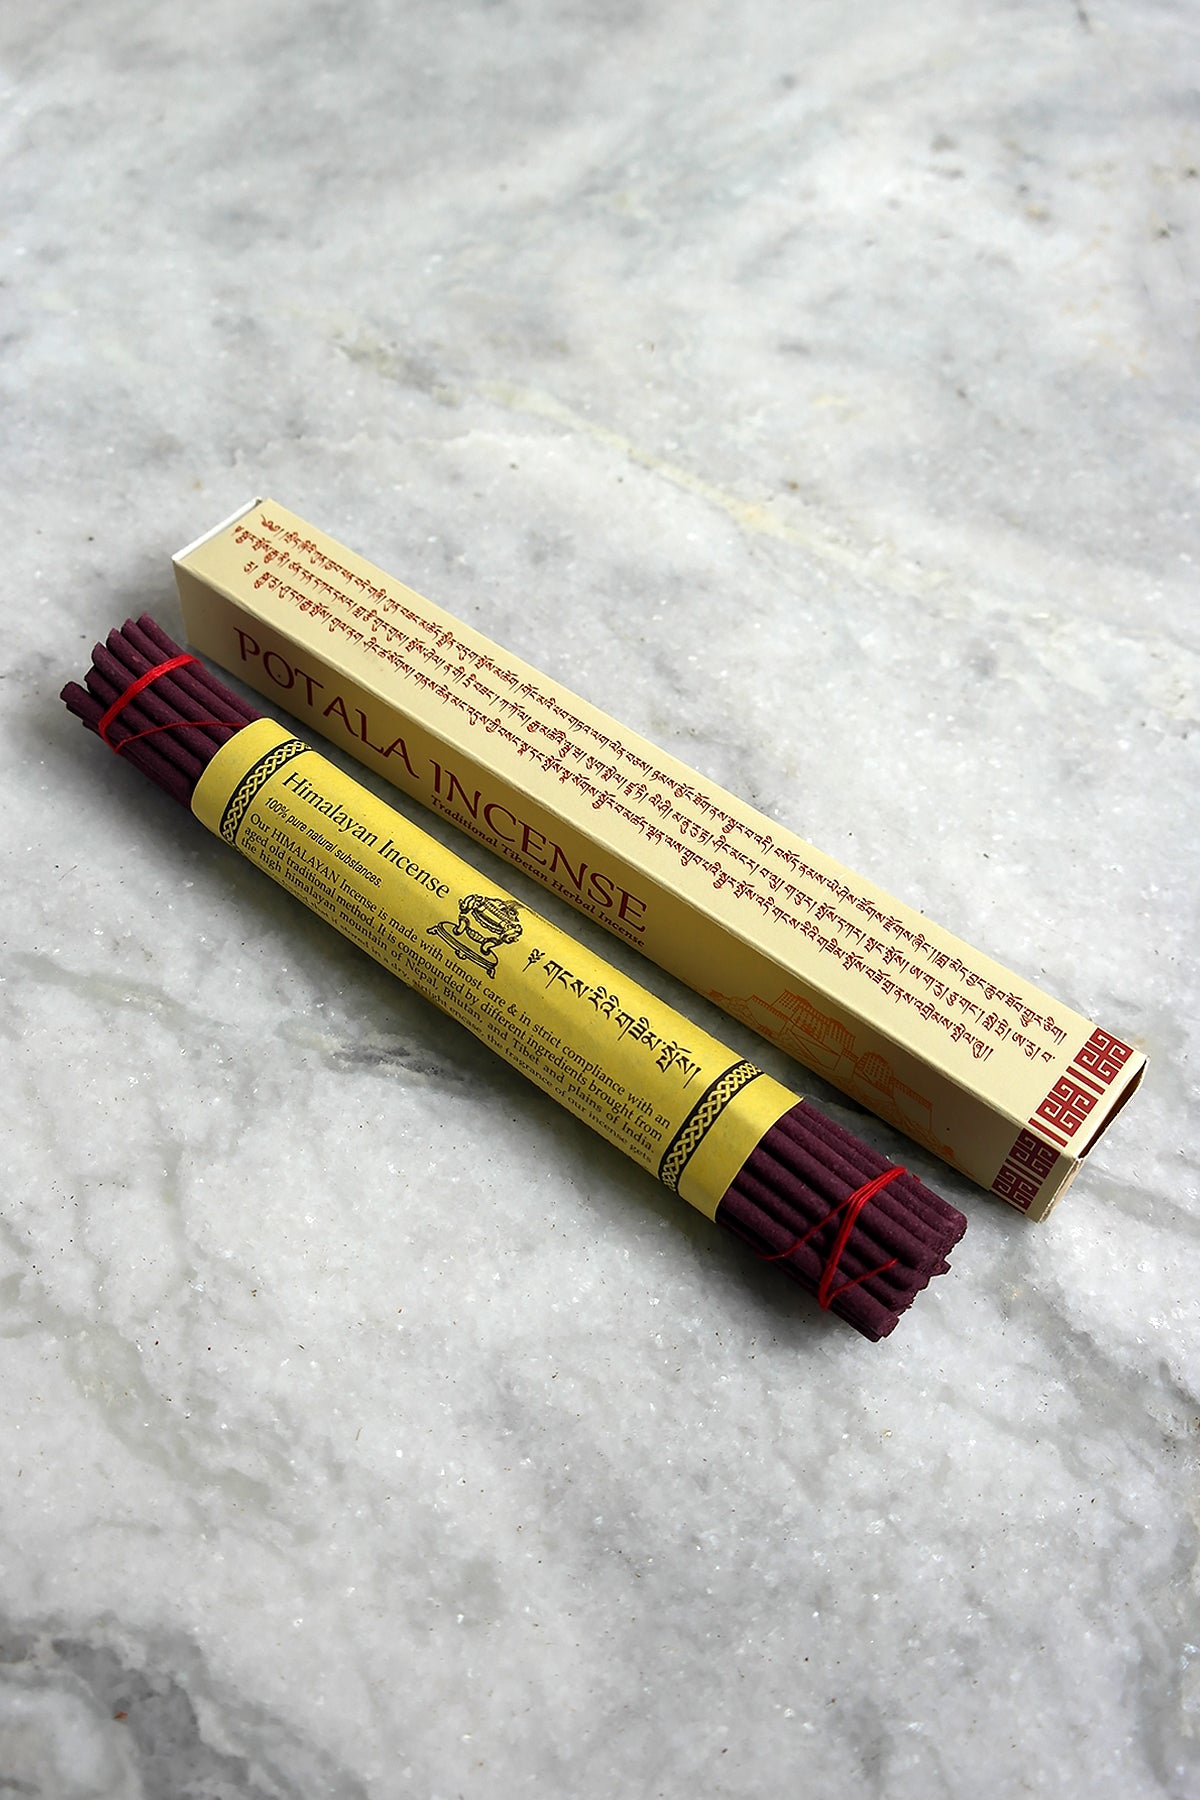 Potala Incense - Traditional Tibetan Herbal Incense